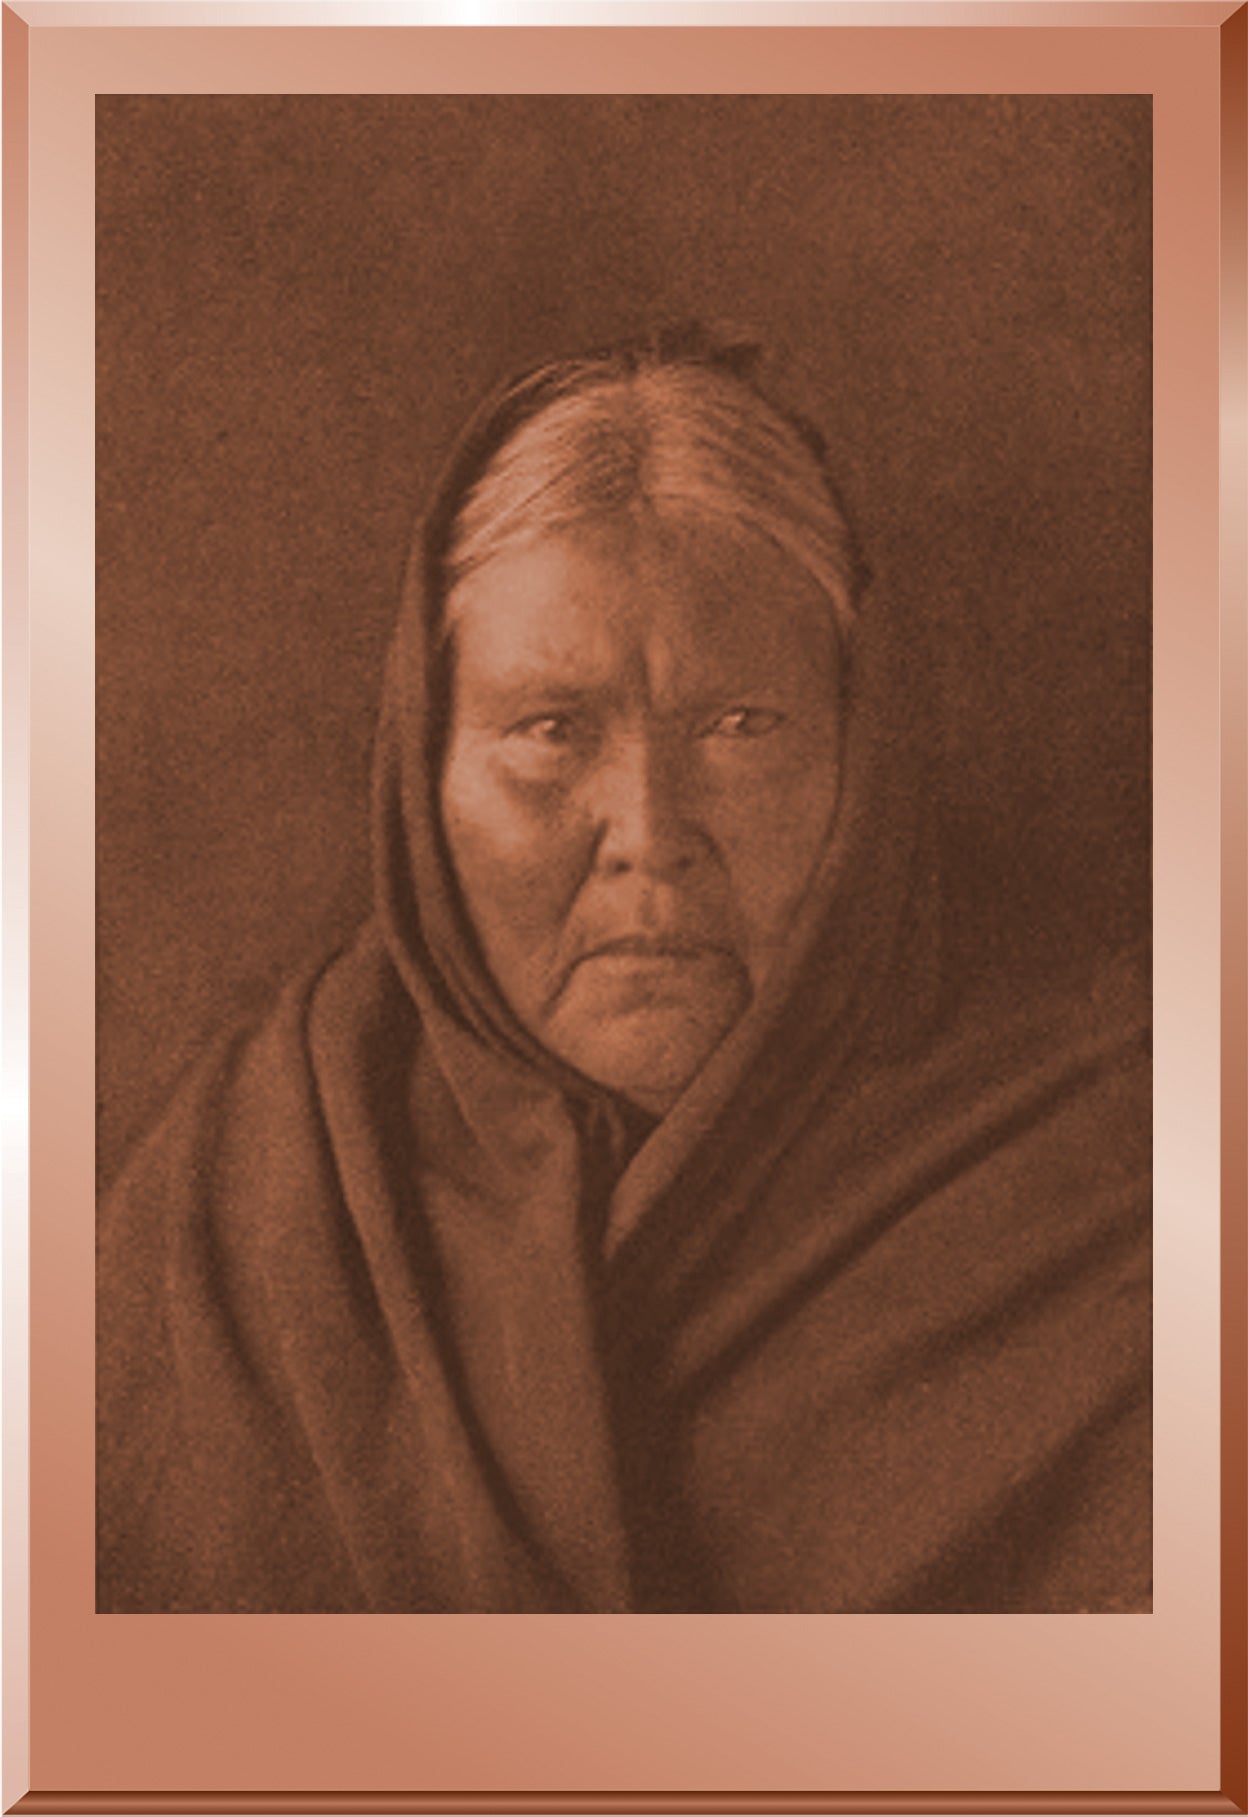 Ihltawat, of Masset - Haida